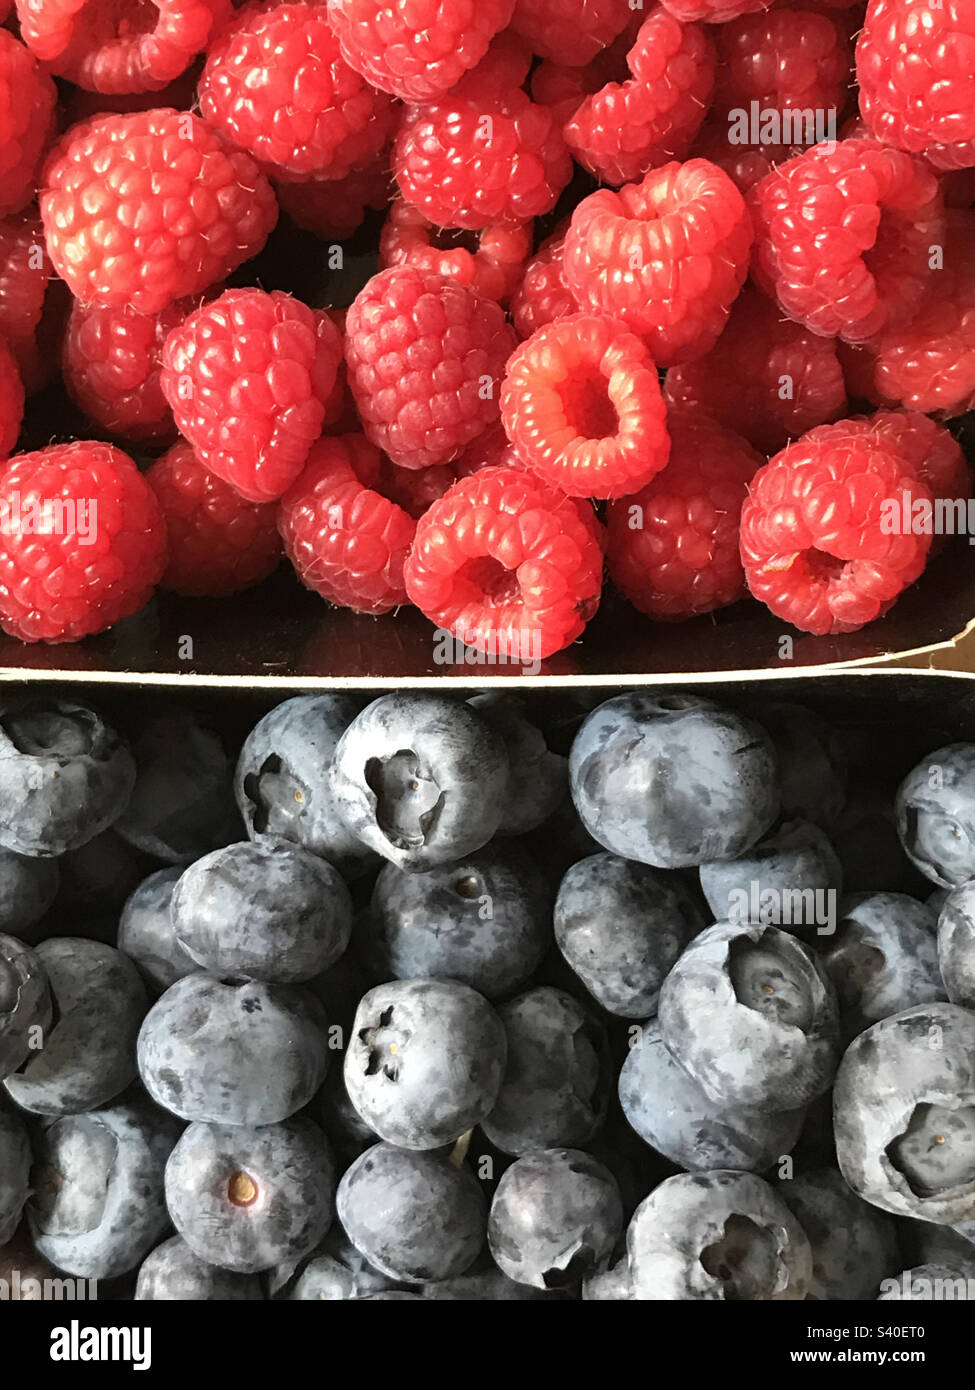 Raspberries and blueberries Stock Photo